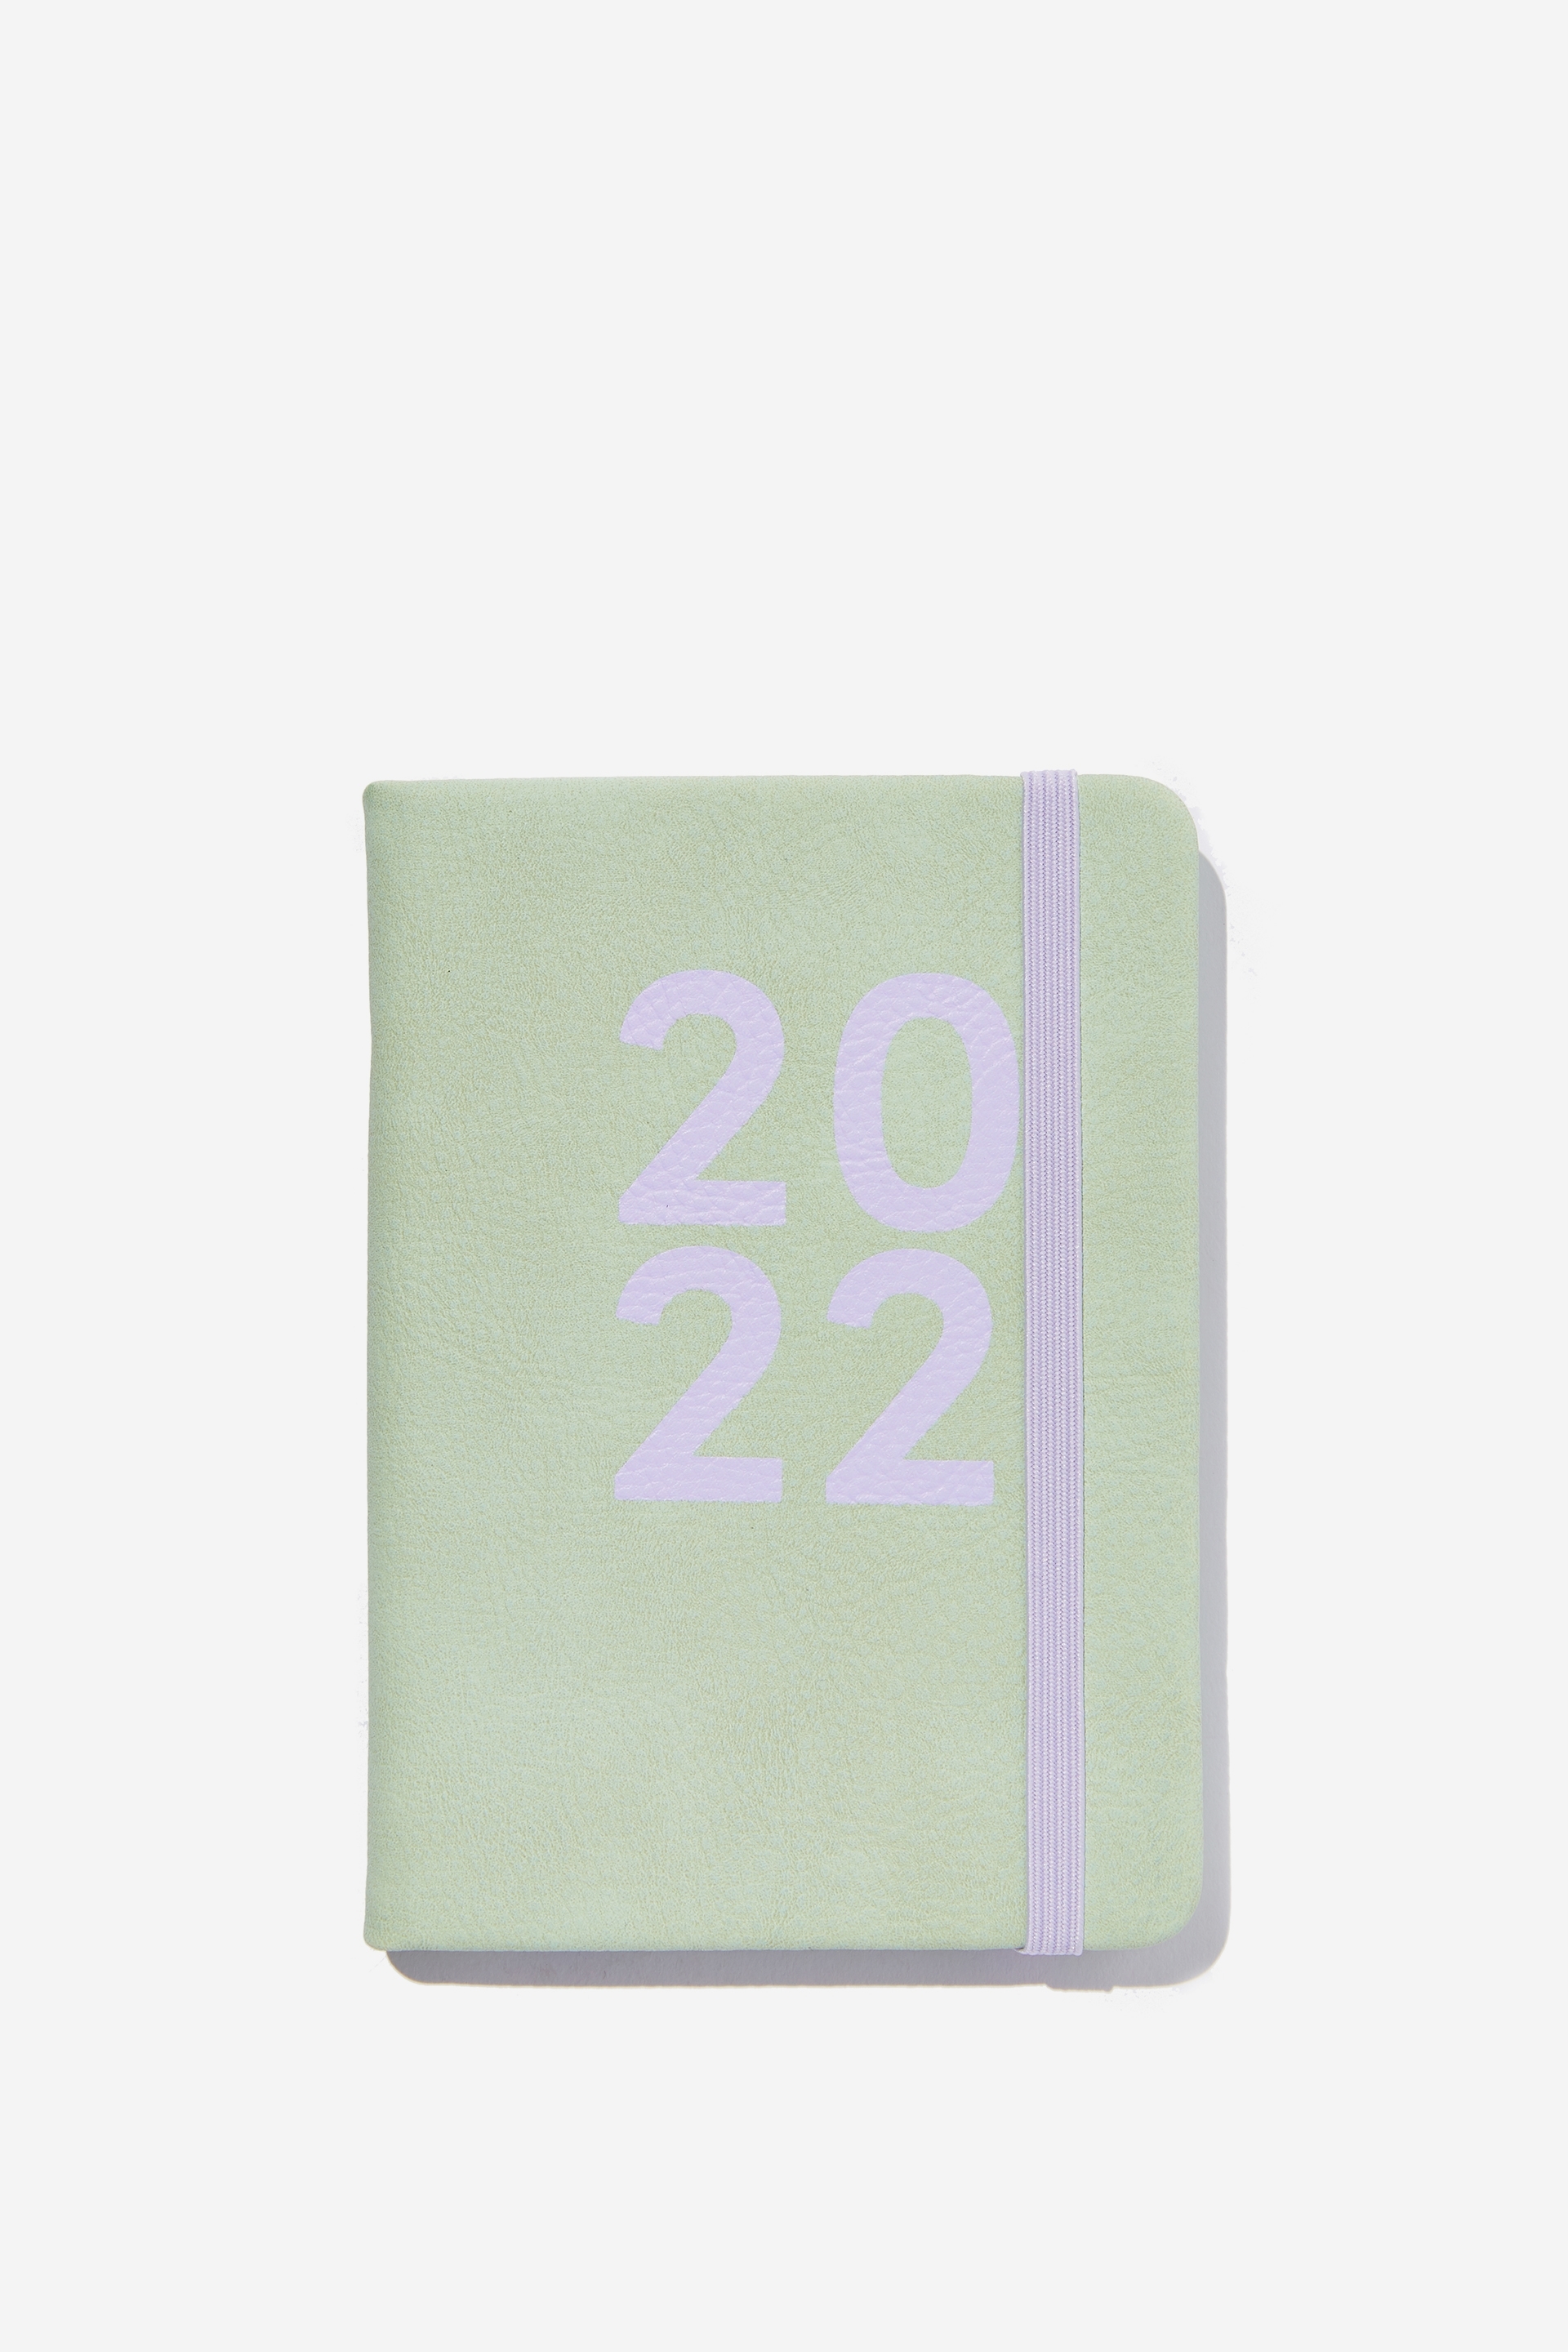 Typo - 2022 A6 Weekly Buffalo Diary - Spring mint